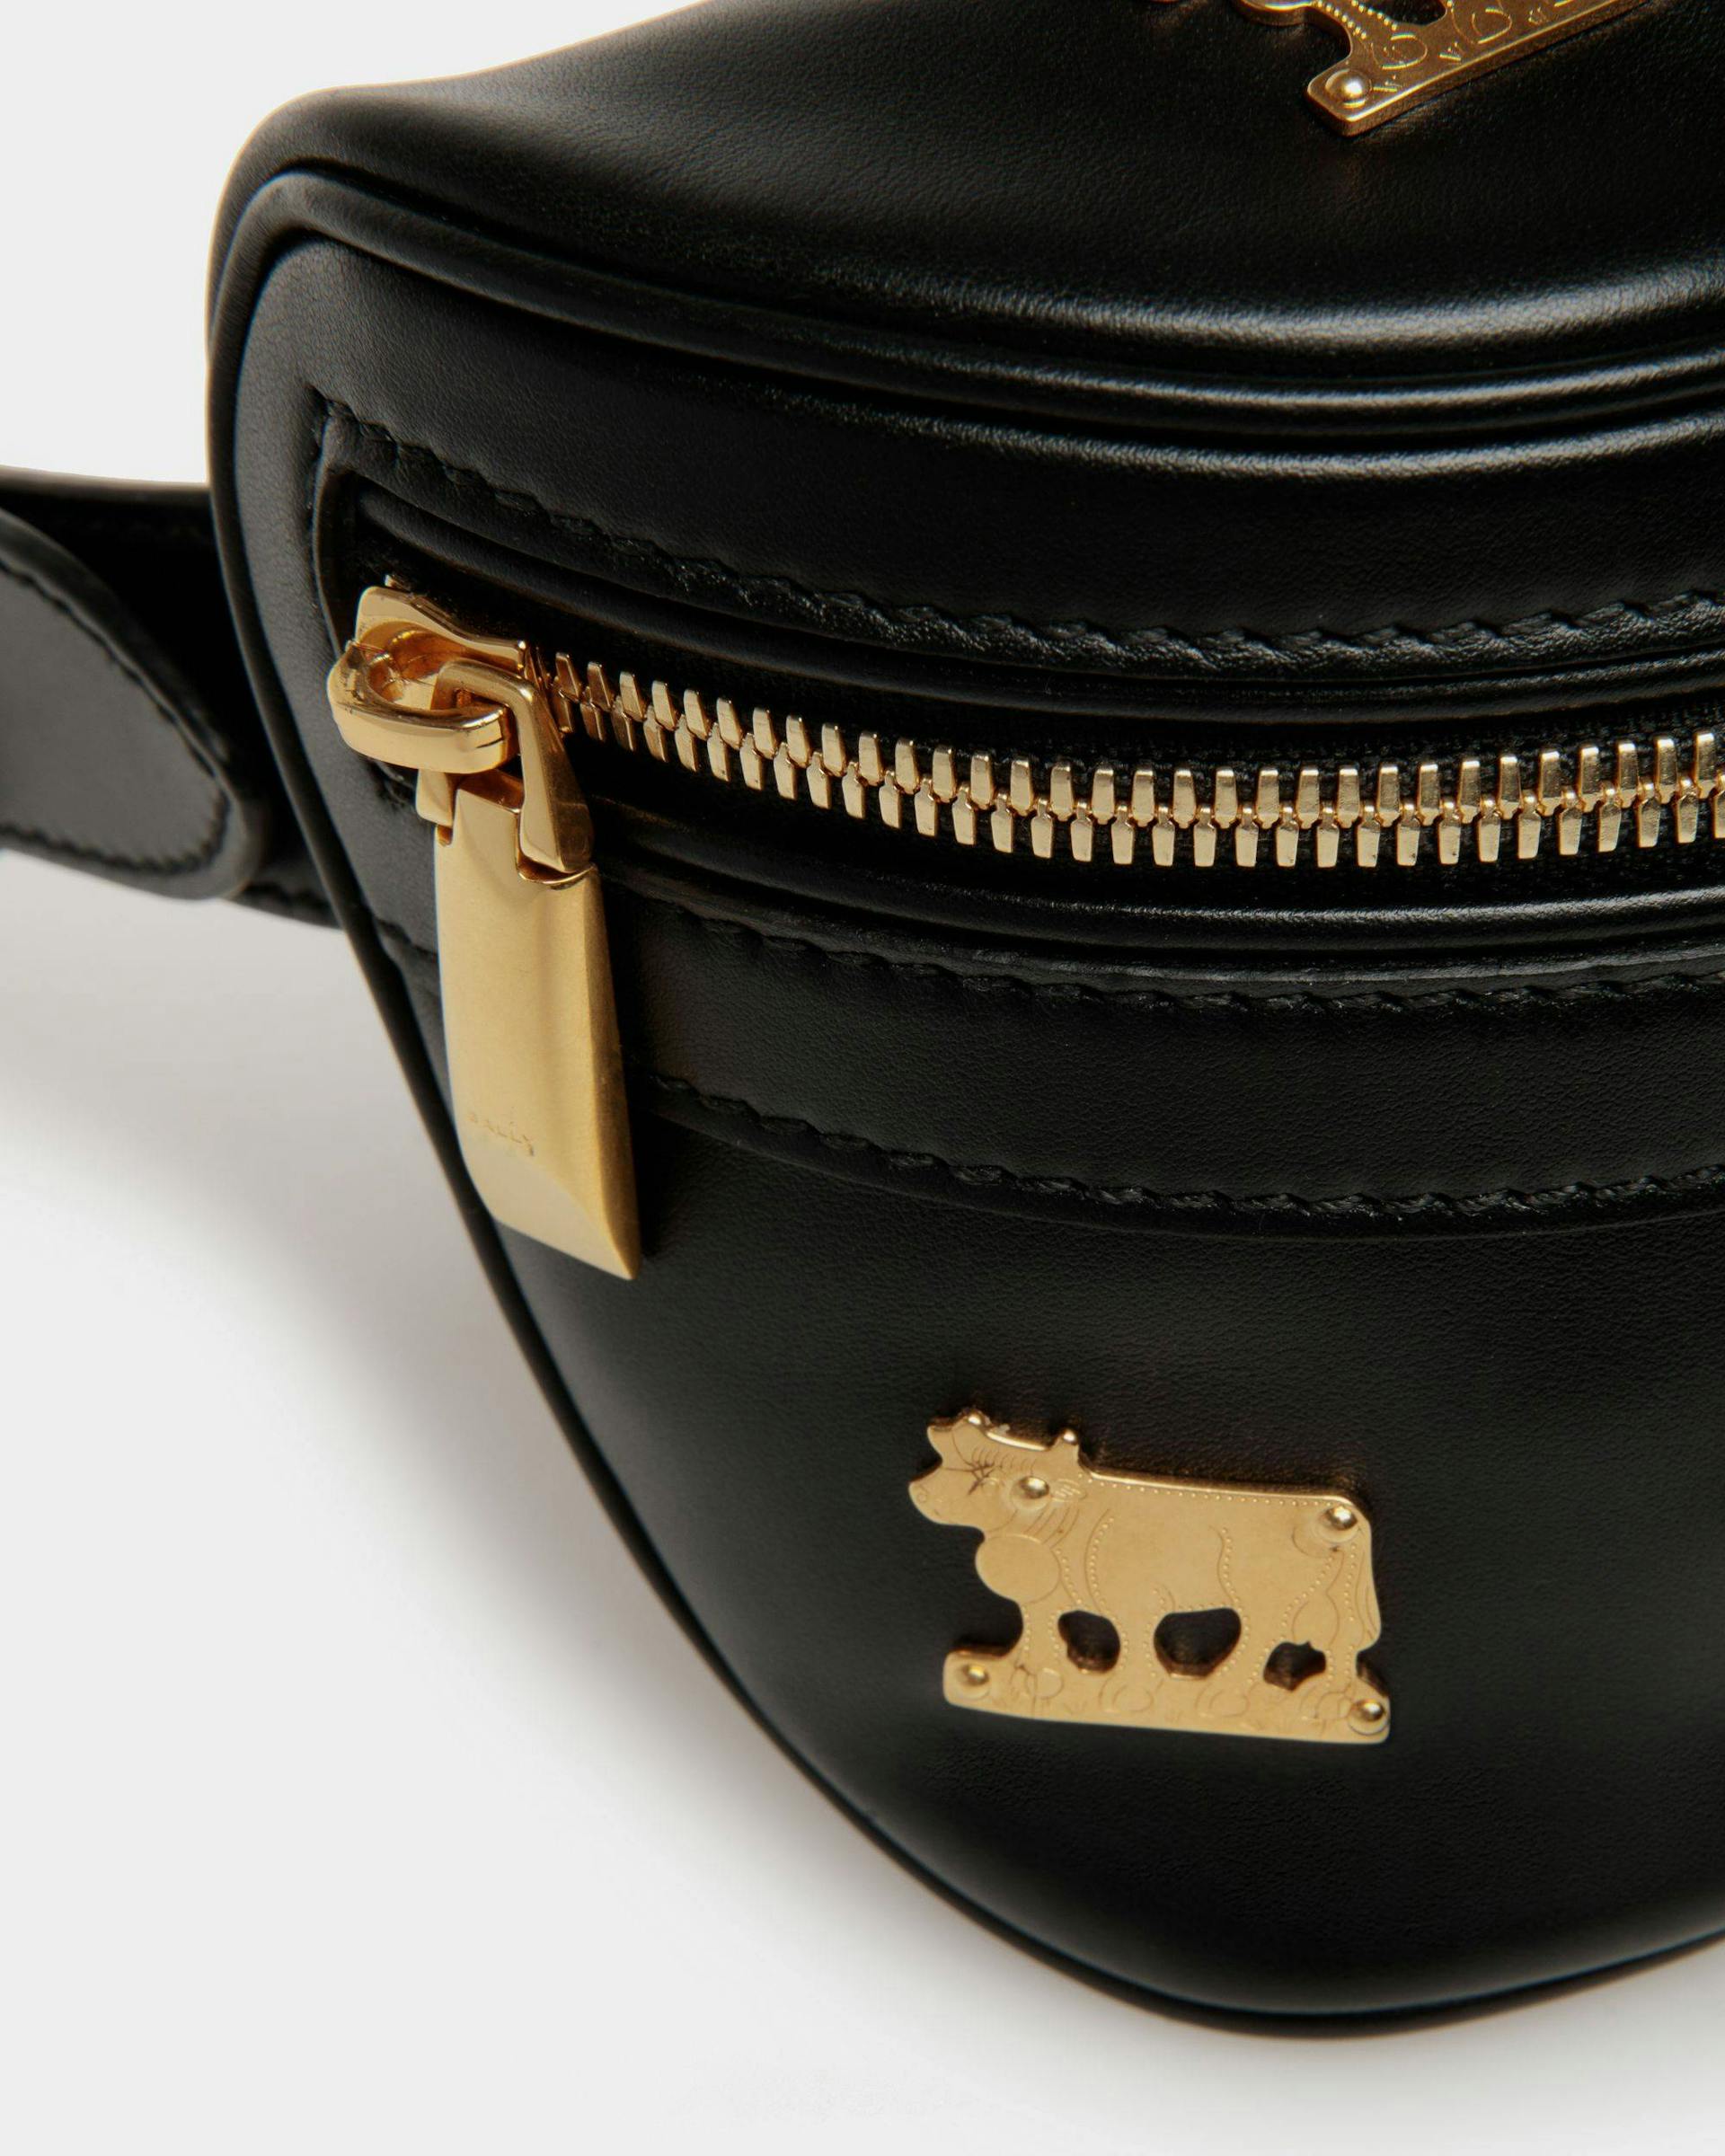 Women's Moutain Belt Bag  in Black Leather | Bally | Still Life Detail